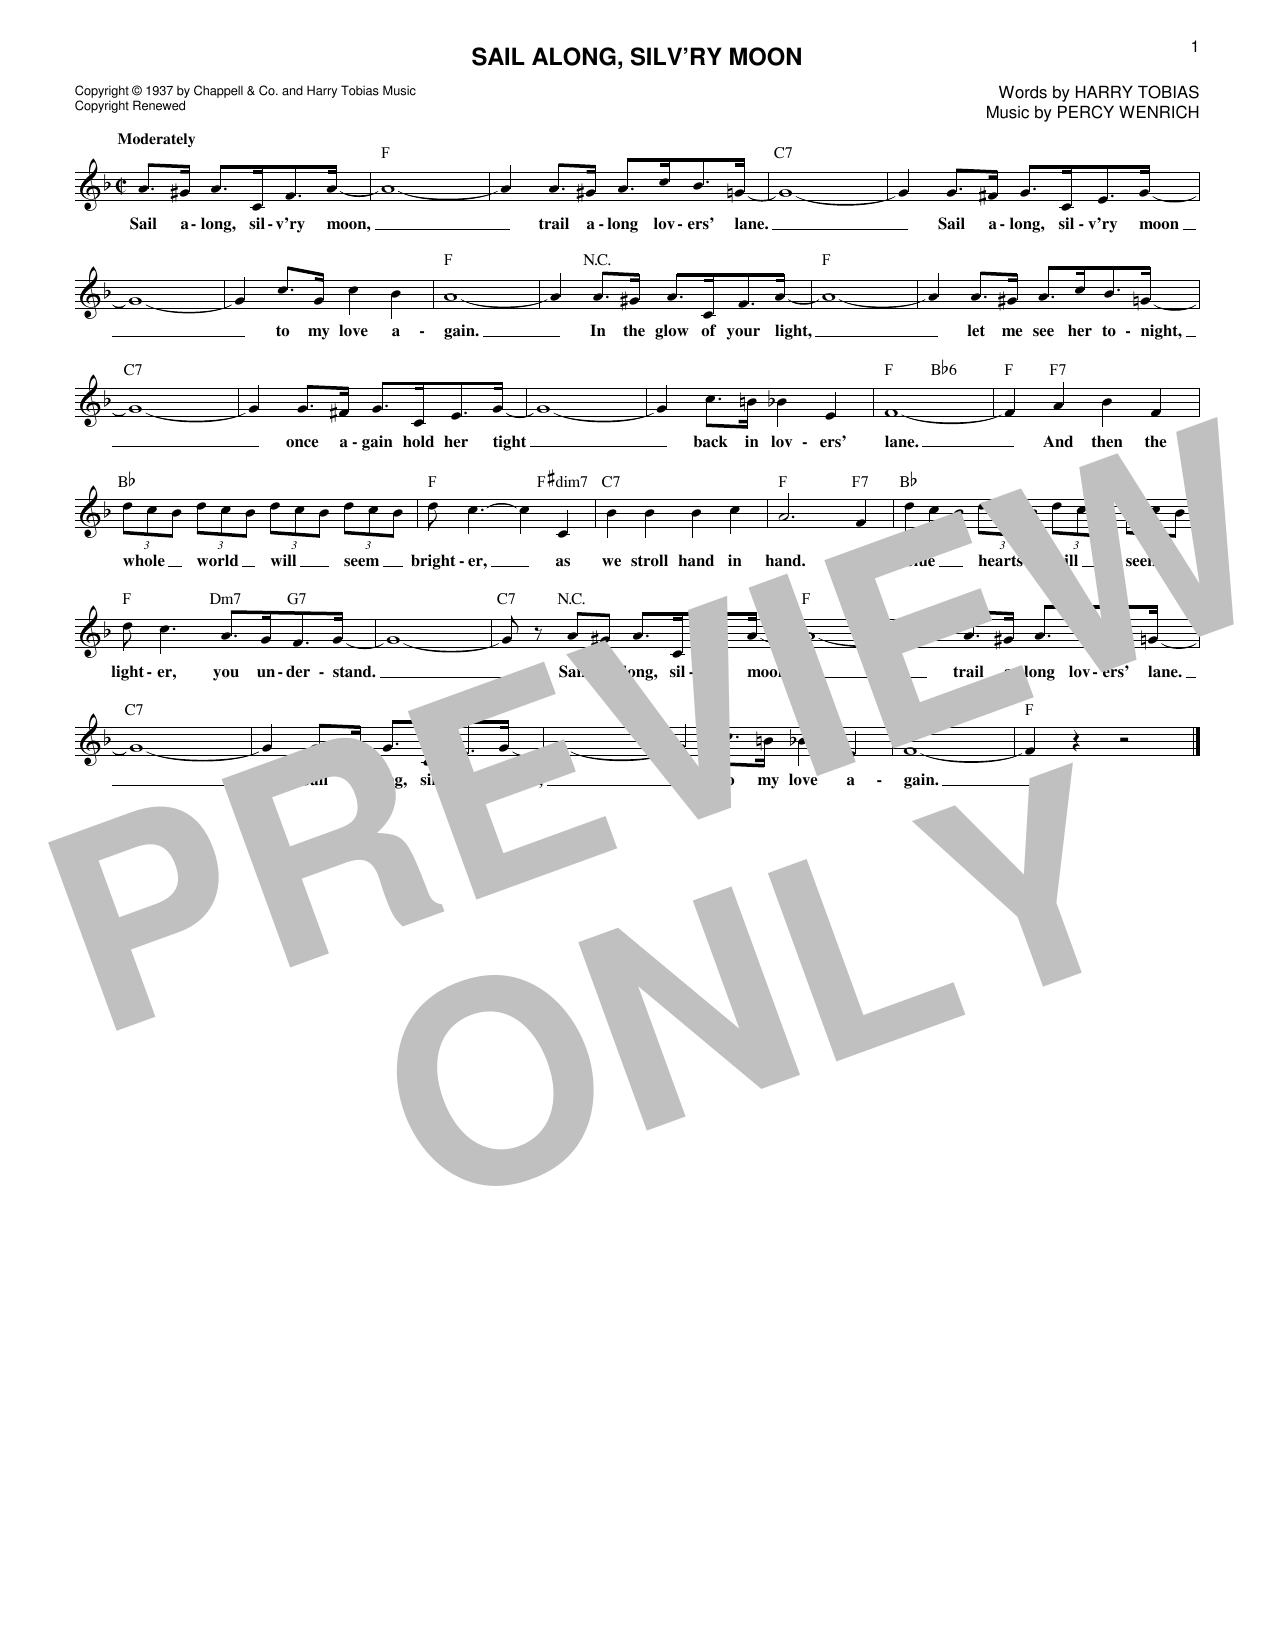 Billy Vaughn Sail Along, Silv'ry Moon Sheet Music Notes & Chords for Lead Sheet / Fake Book - Download or Print PDF